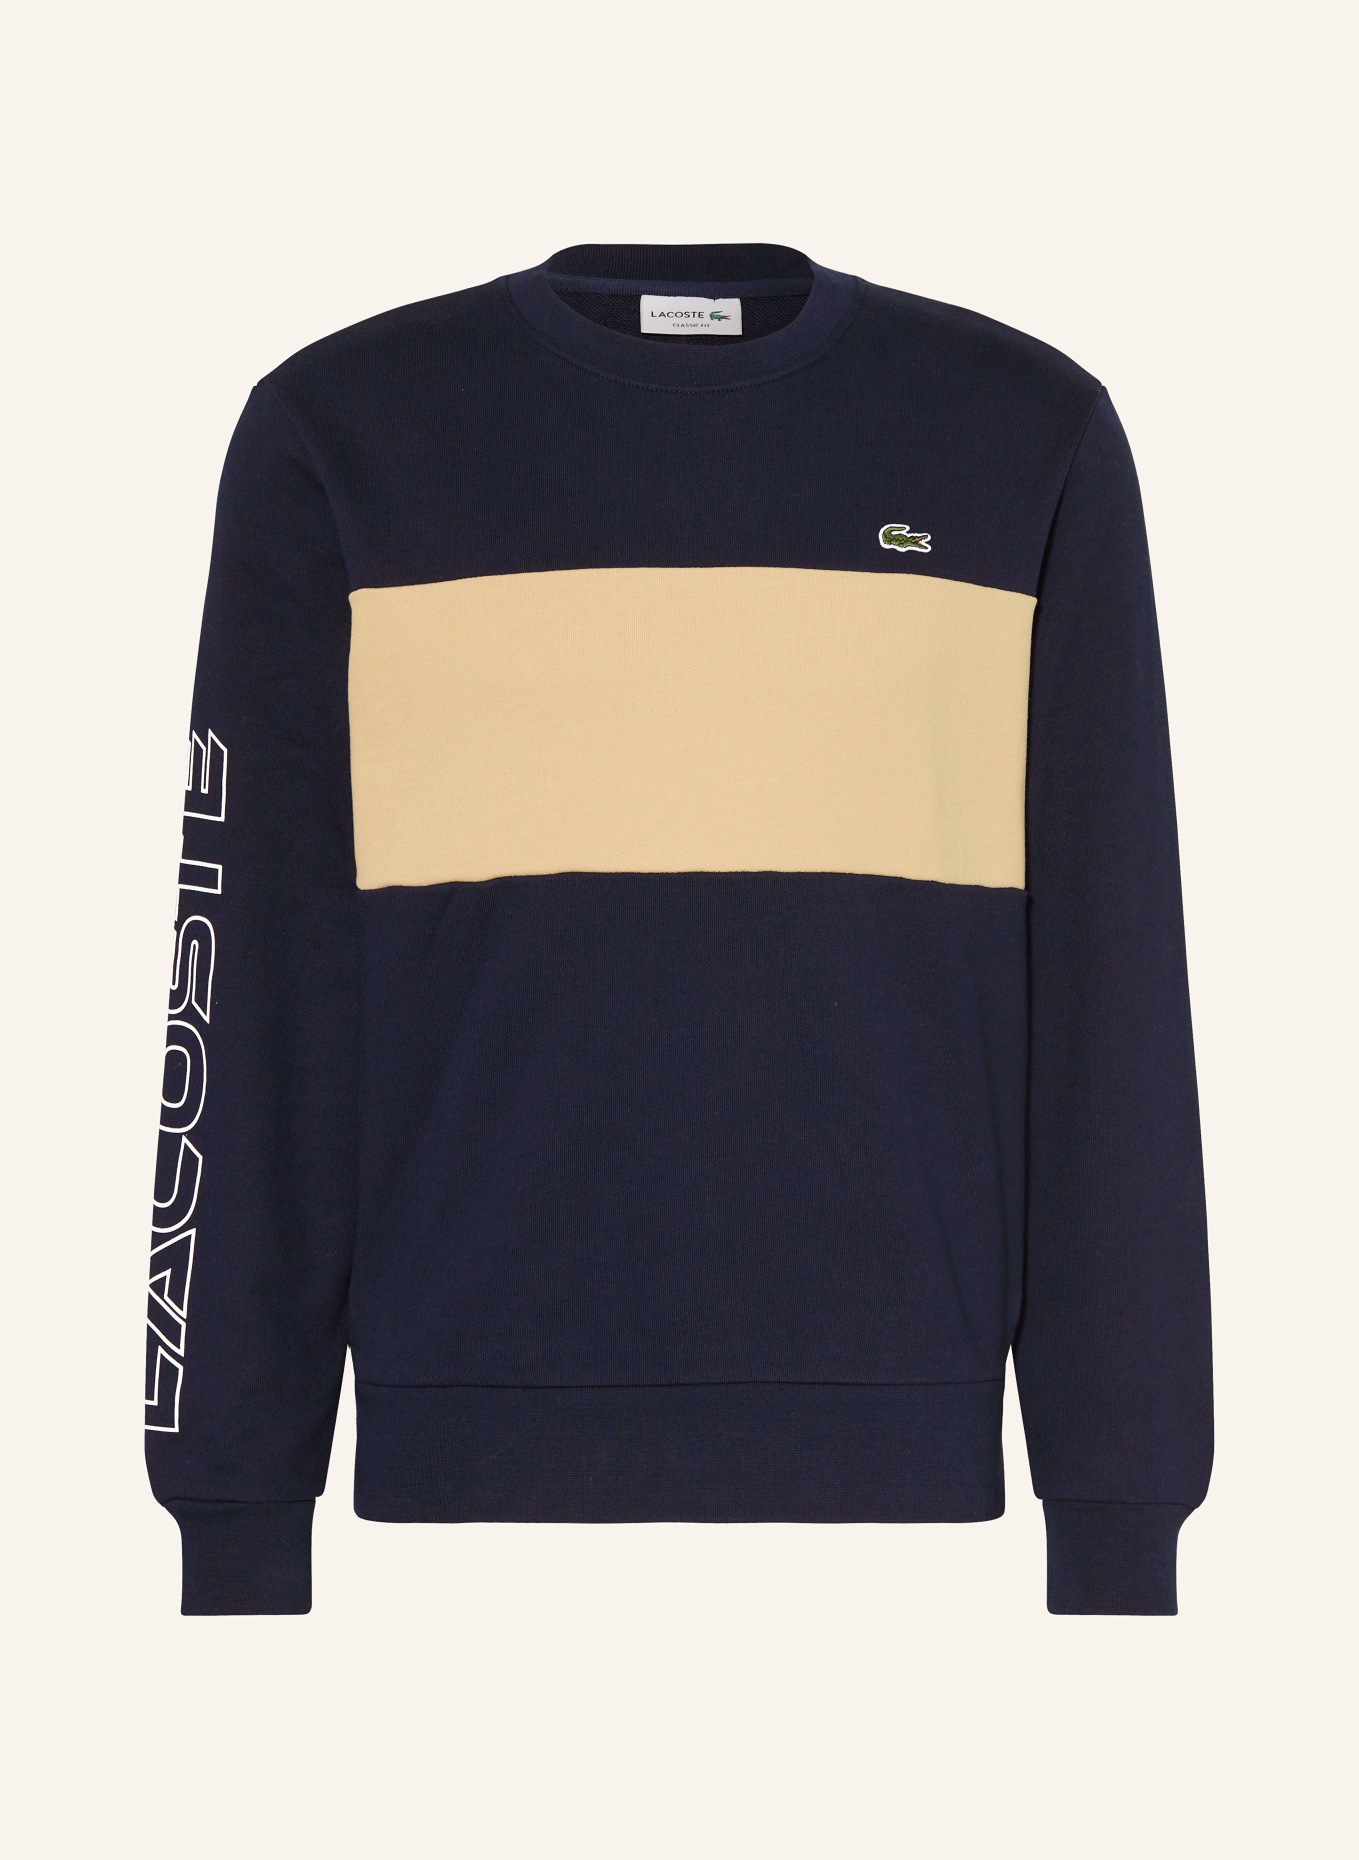 LACOSTE Sweatshirt, Farbe: DUNKELBLAU/ BEIGE (Bild 1)